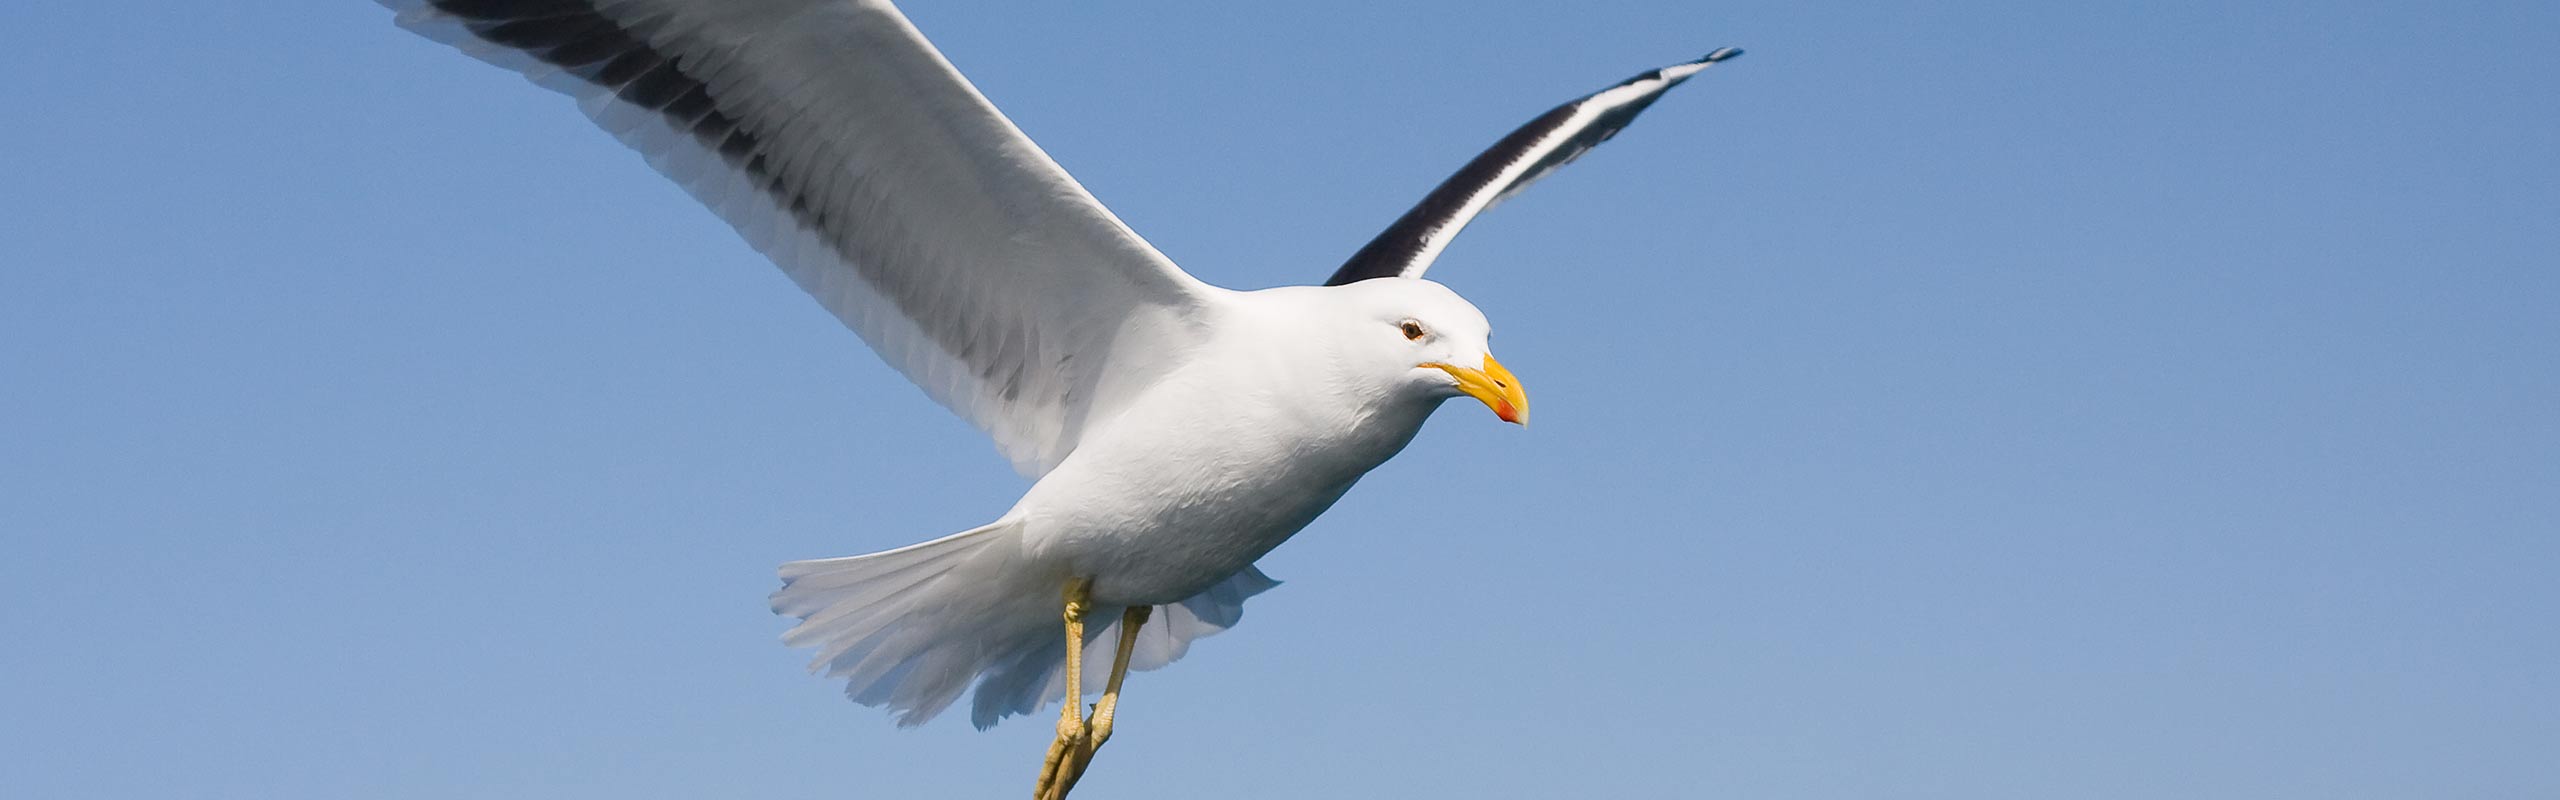 Seagull Control